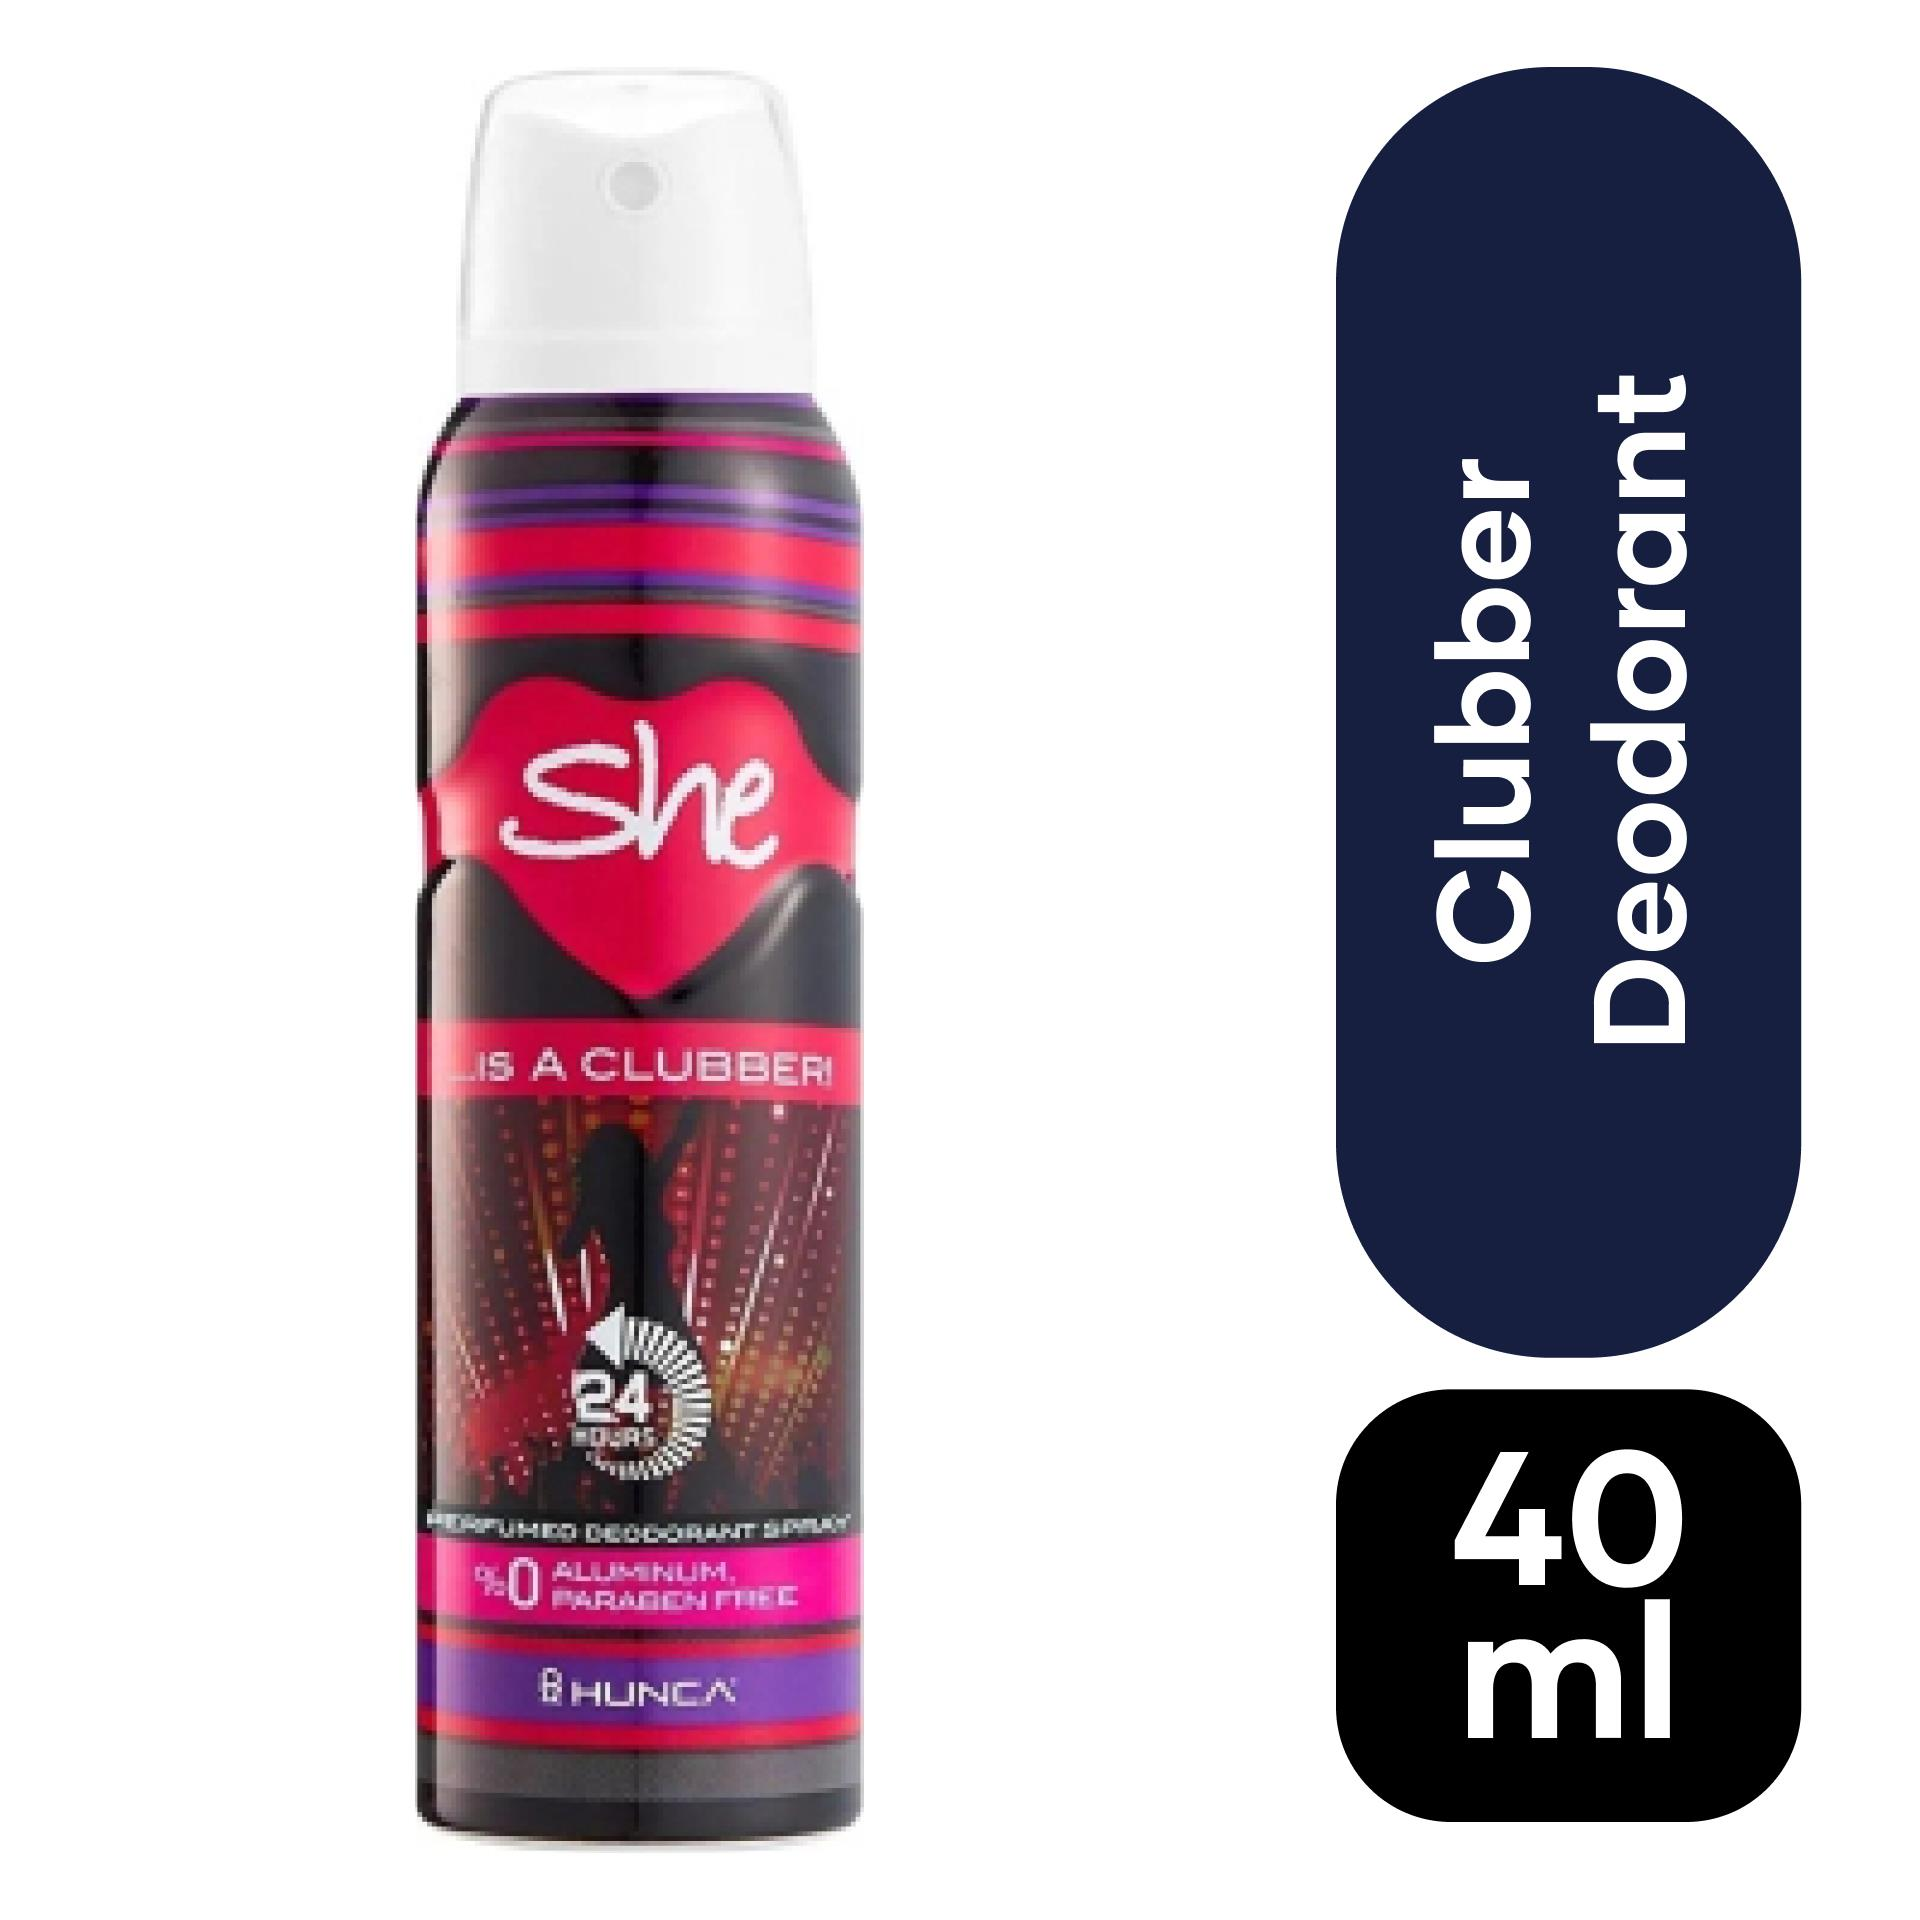 She Women Deodorant Clubber 150 ml